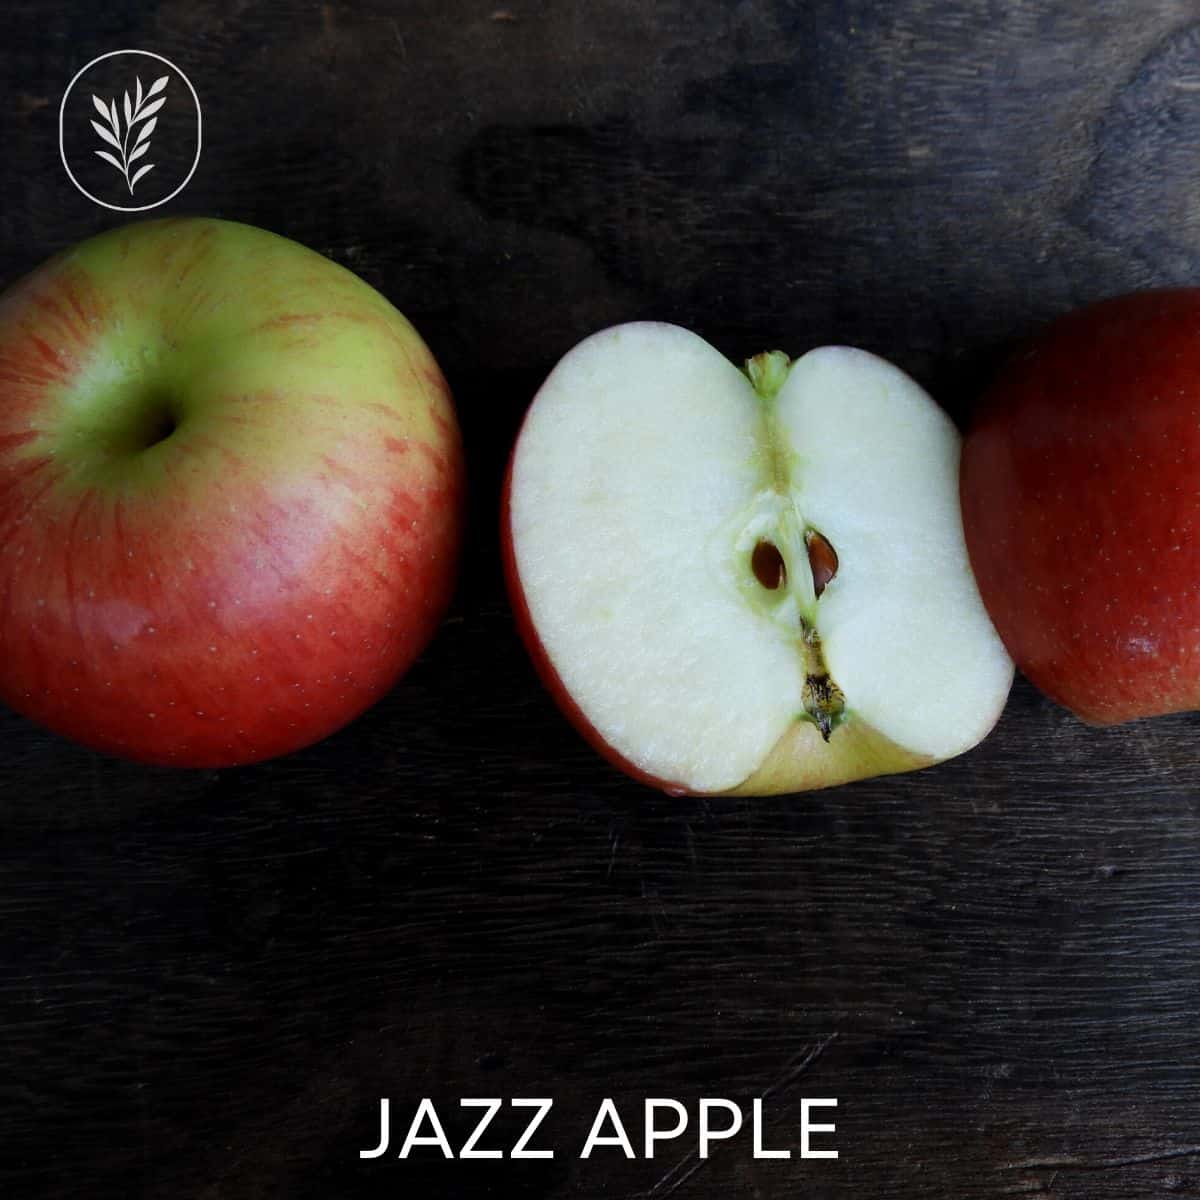 Jazz apple via @home4theharvest